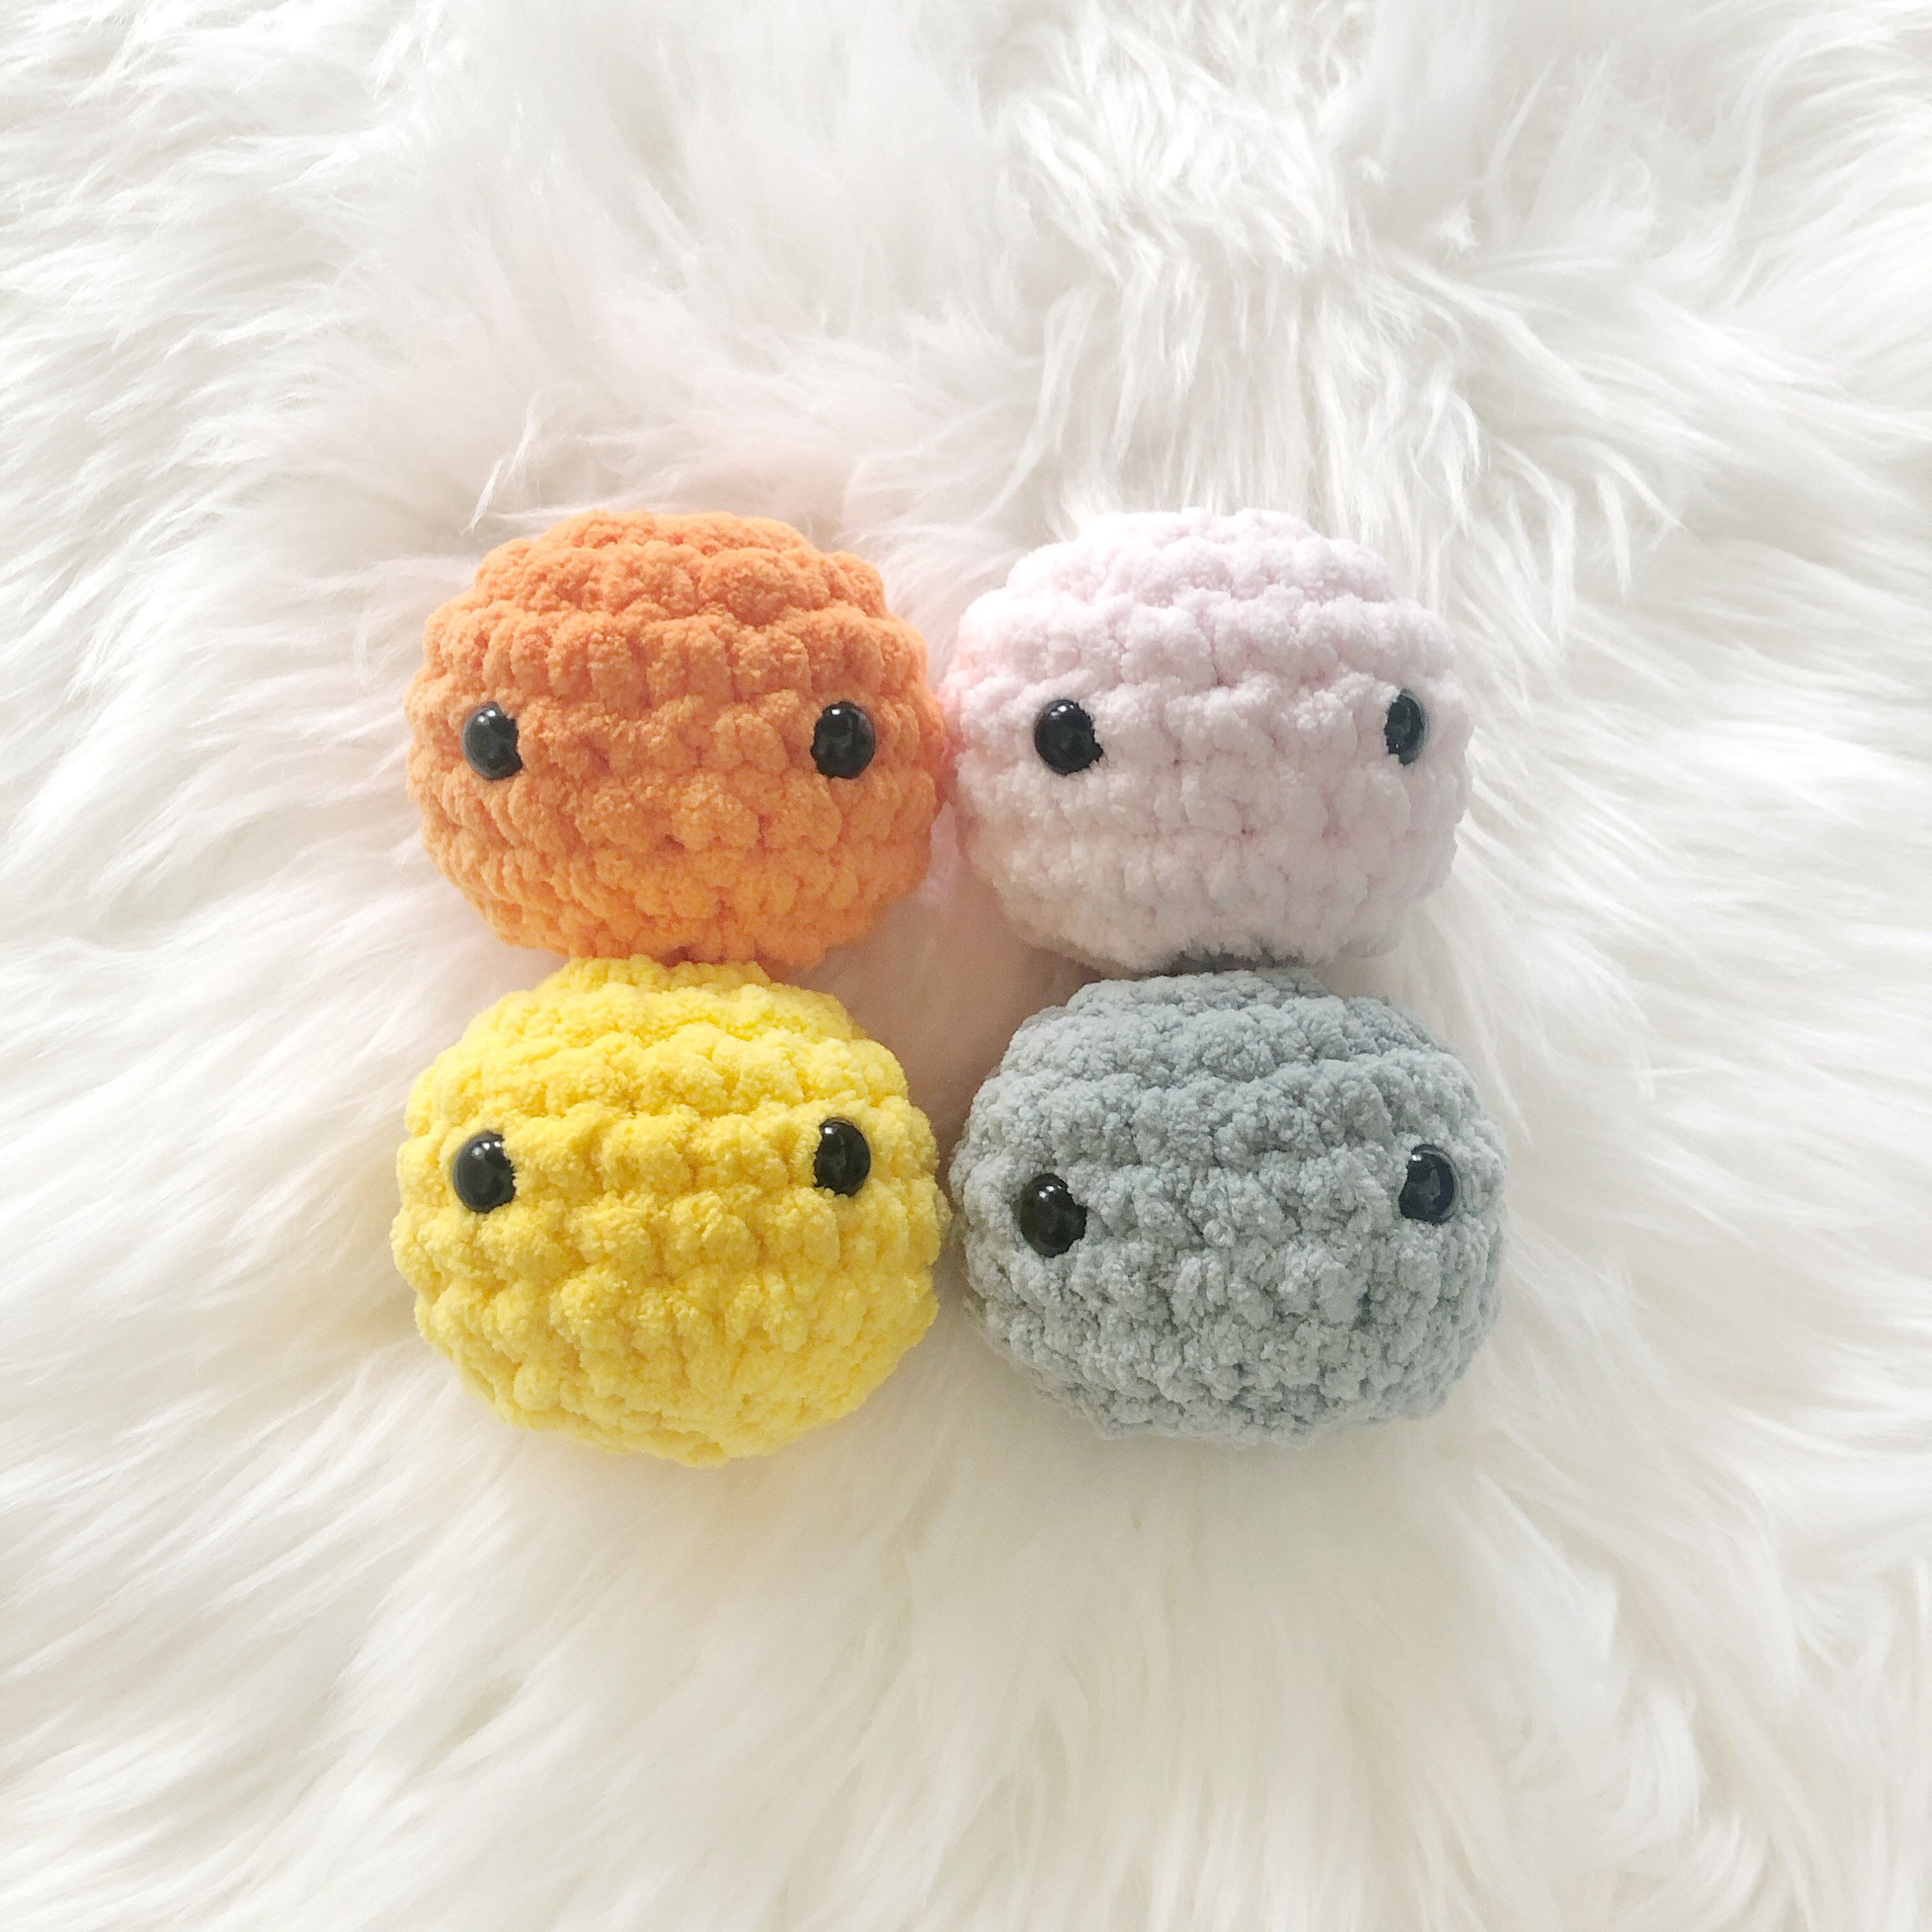  Crochet Stuffed Animals